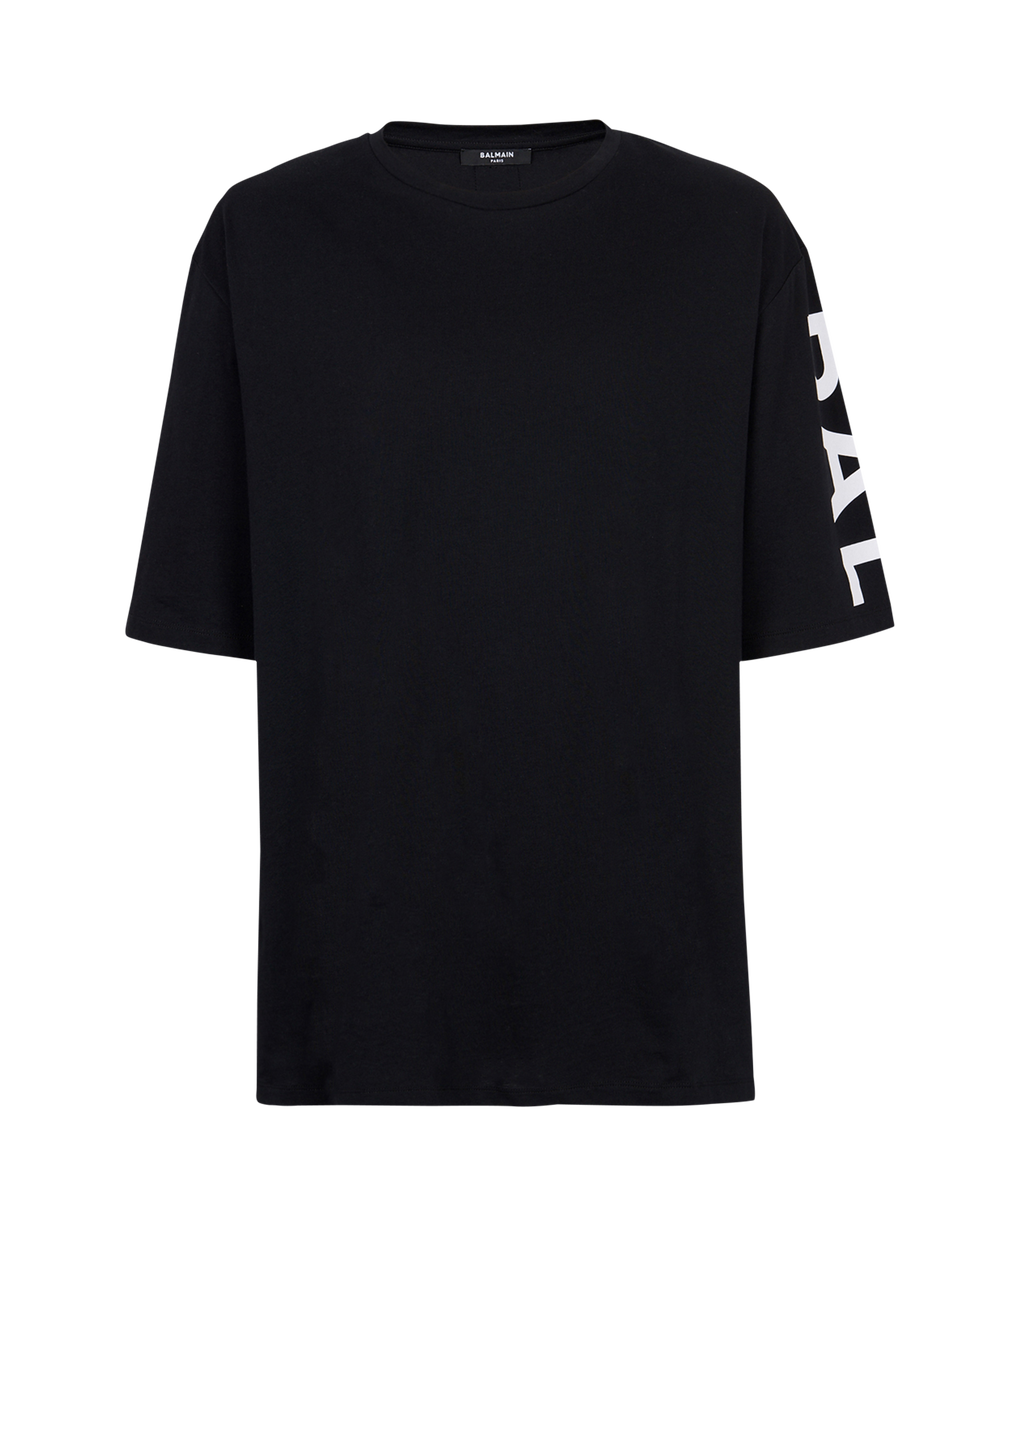 Oversized eco-designed cotton T-shirt with Balmain logo print, black, hi-res